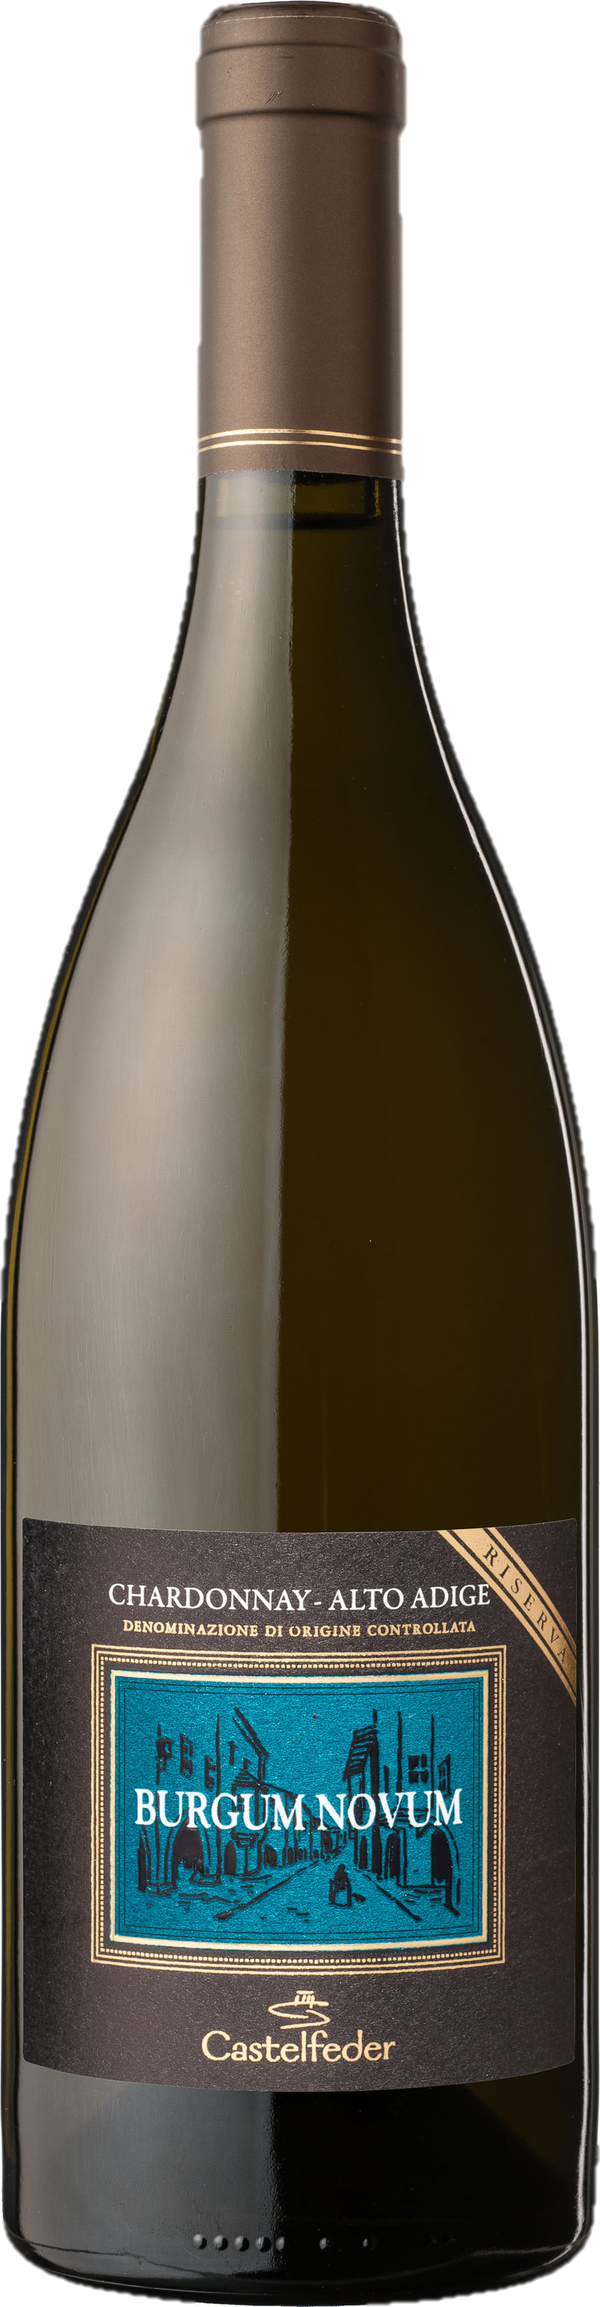 Chardonnay Riserva "BURGUM NOVUM" 2018 Castelfeder